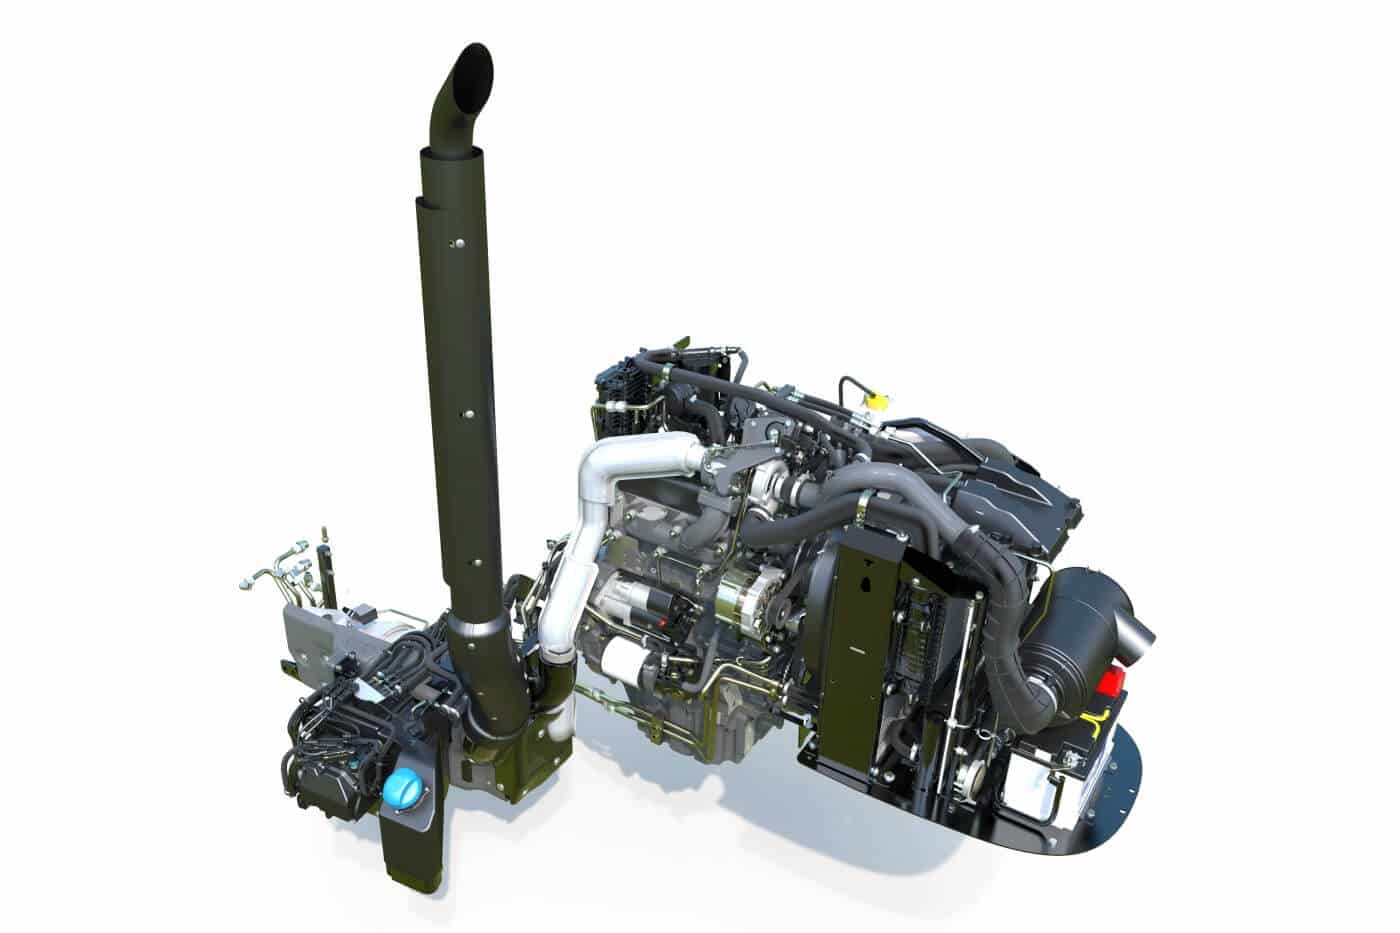 mf-4700-m-engine-key-benefit-1400x933